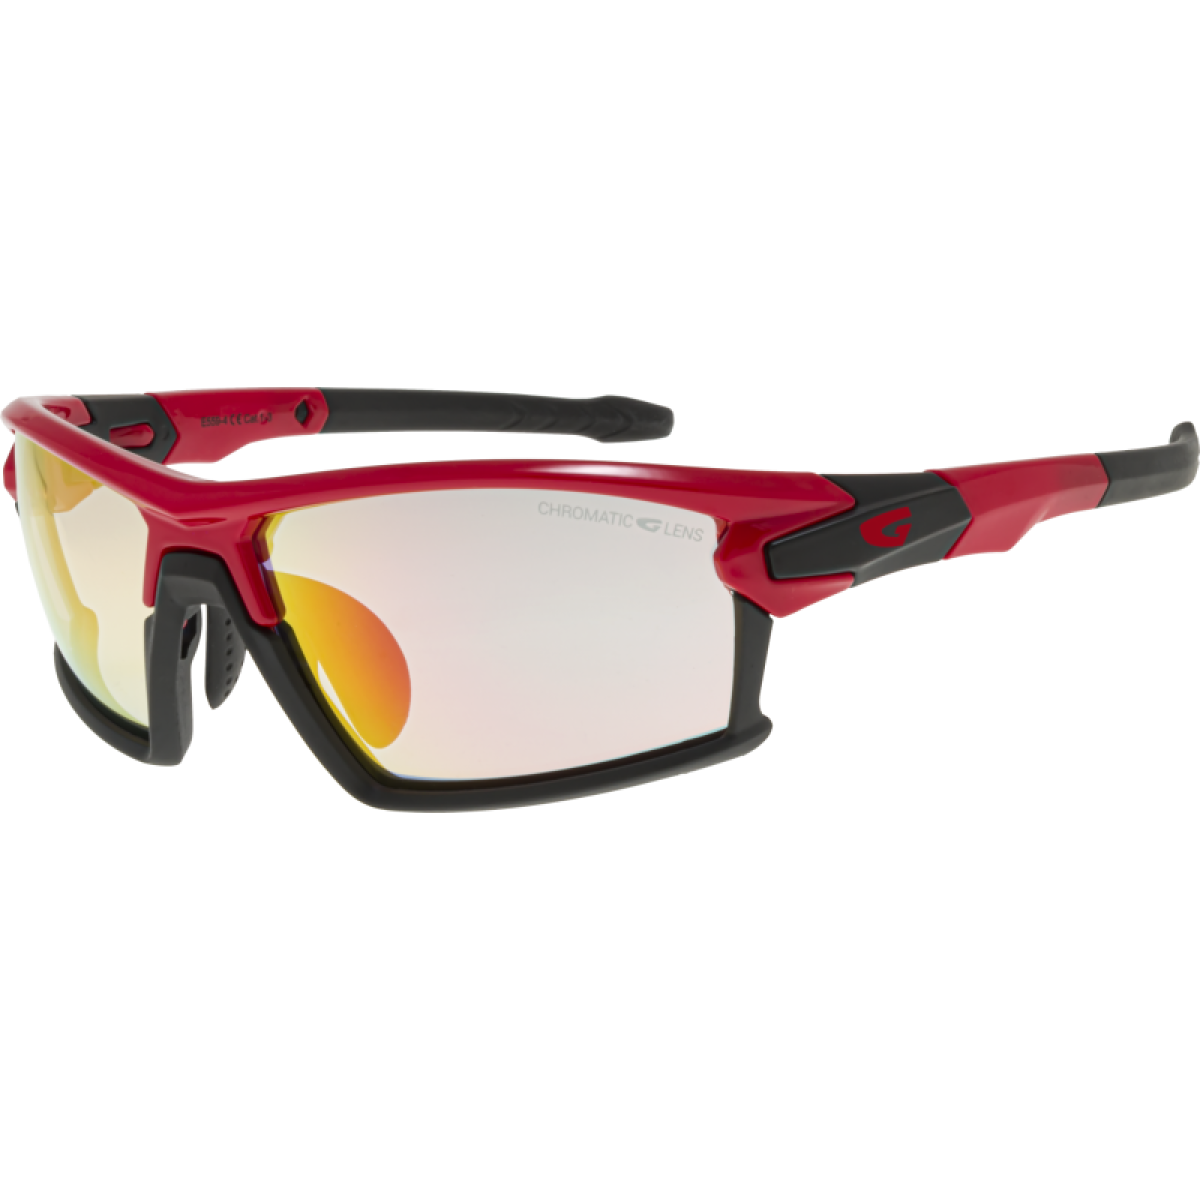 Photochromatic sunglasses  E559-4 GOG - view 1